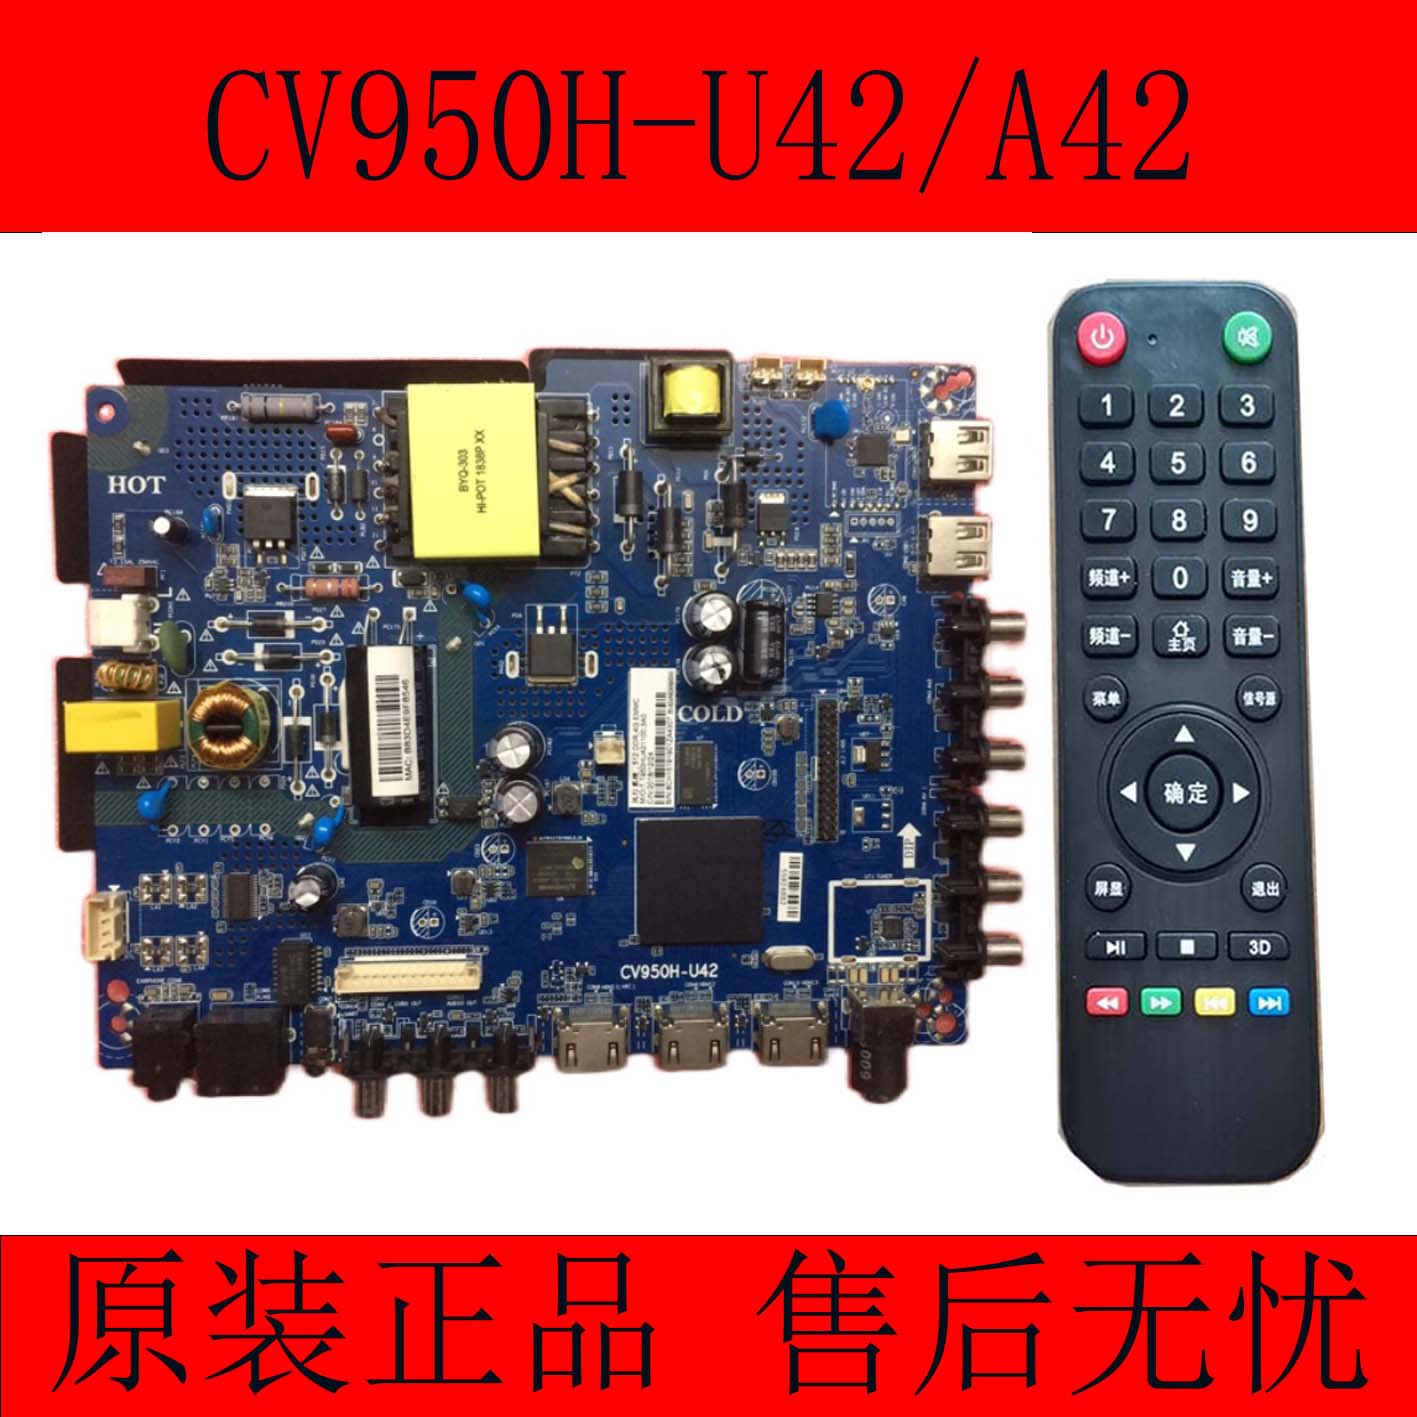 New original CV950H-A42 CV950H-U42 Quad core Android intelligence WiFi LCD TV Board